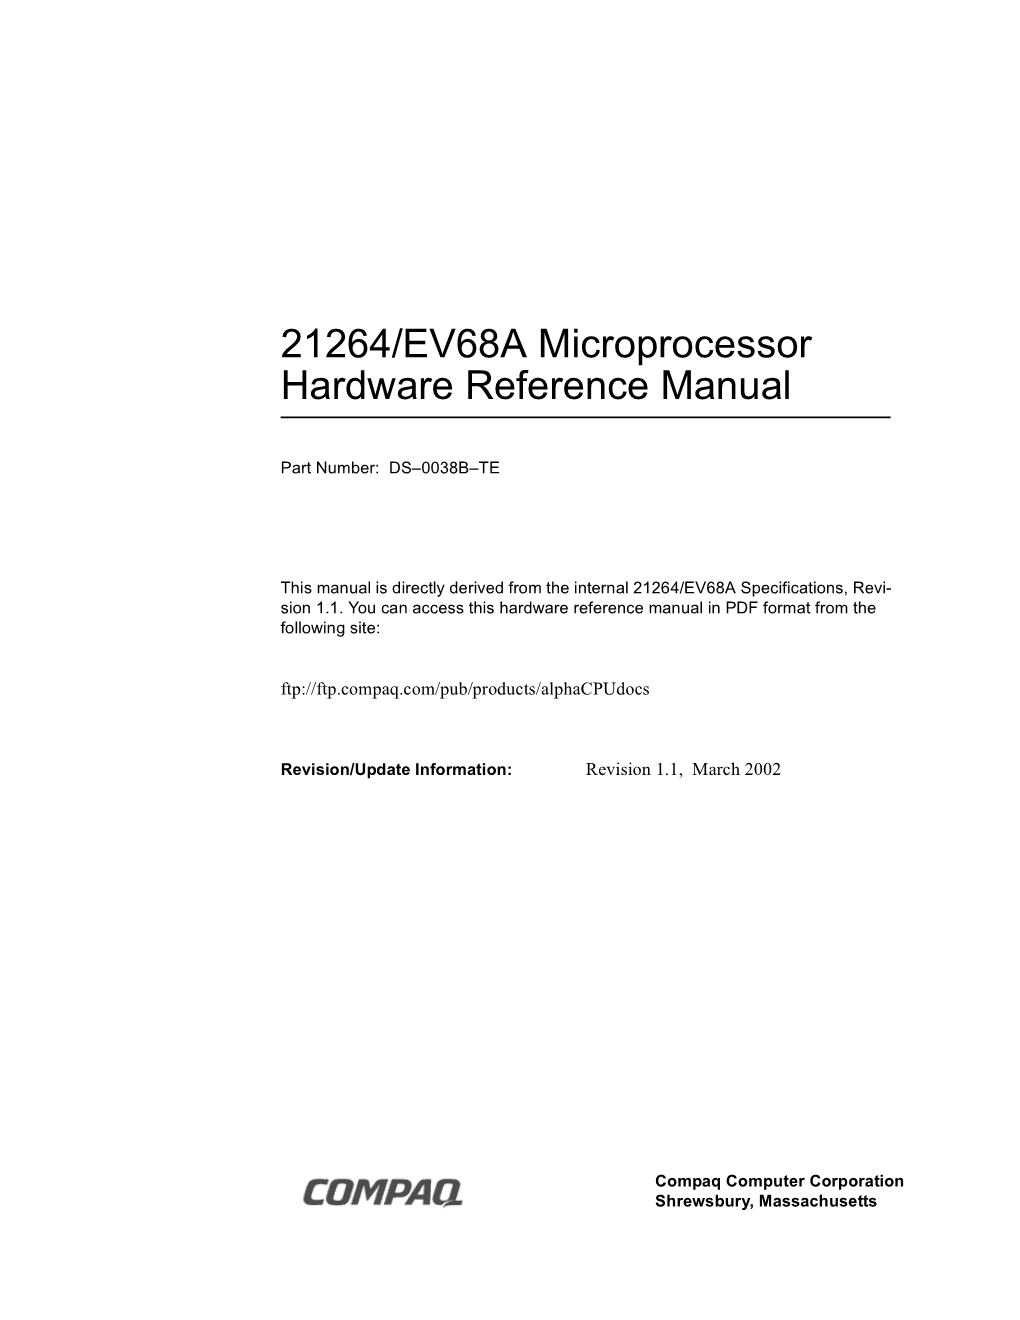 21264/EV68A Microprocessor Hardware Reference Manual